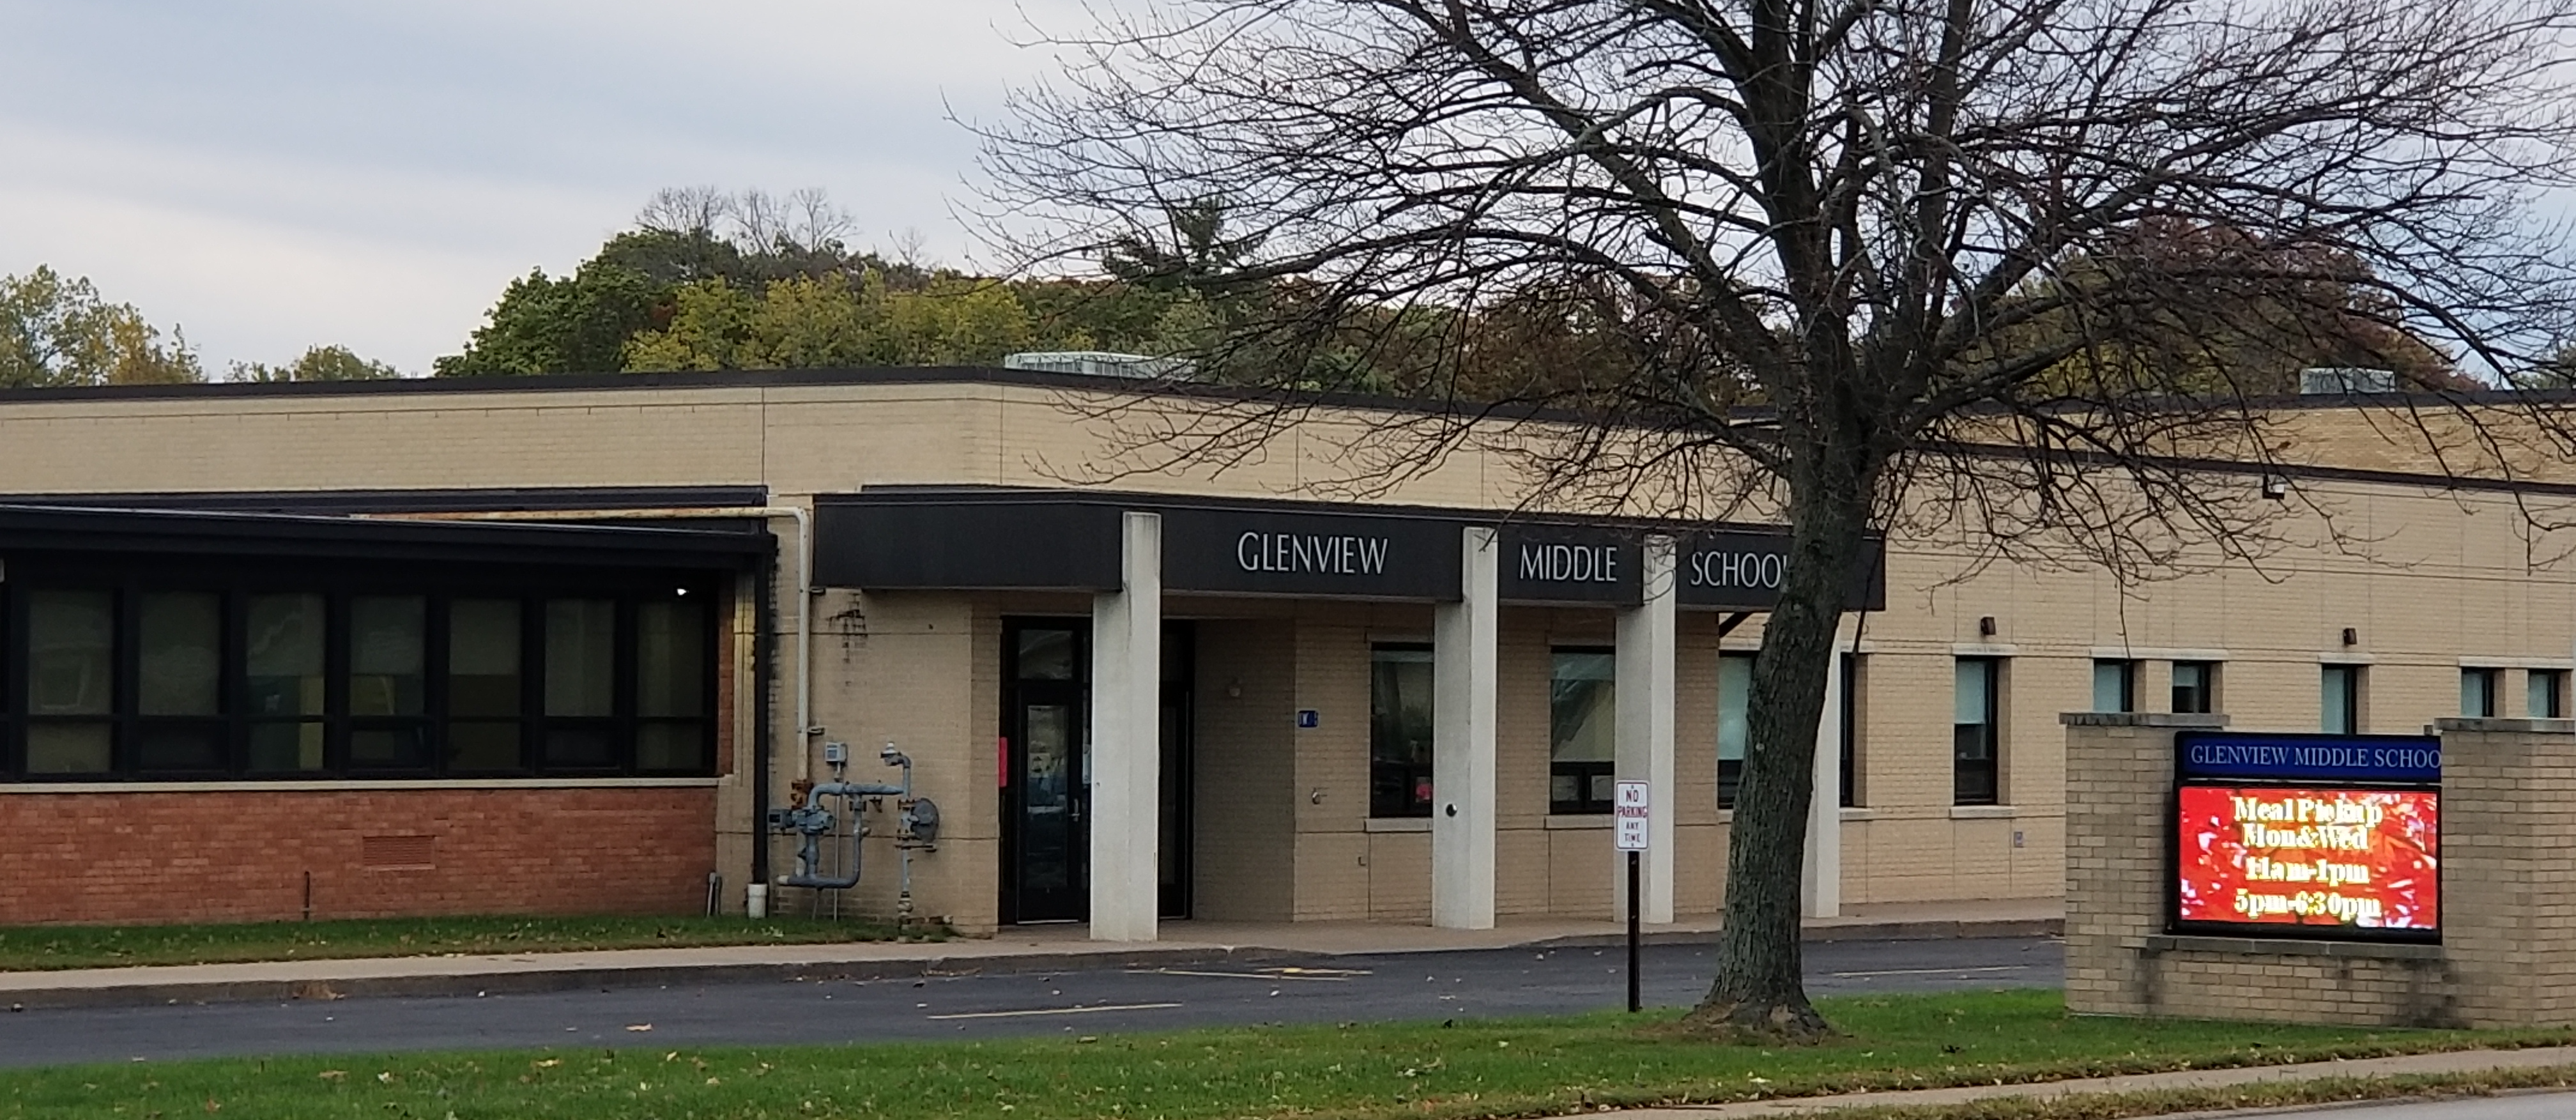 Glenview Main Entrance